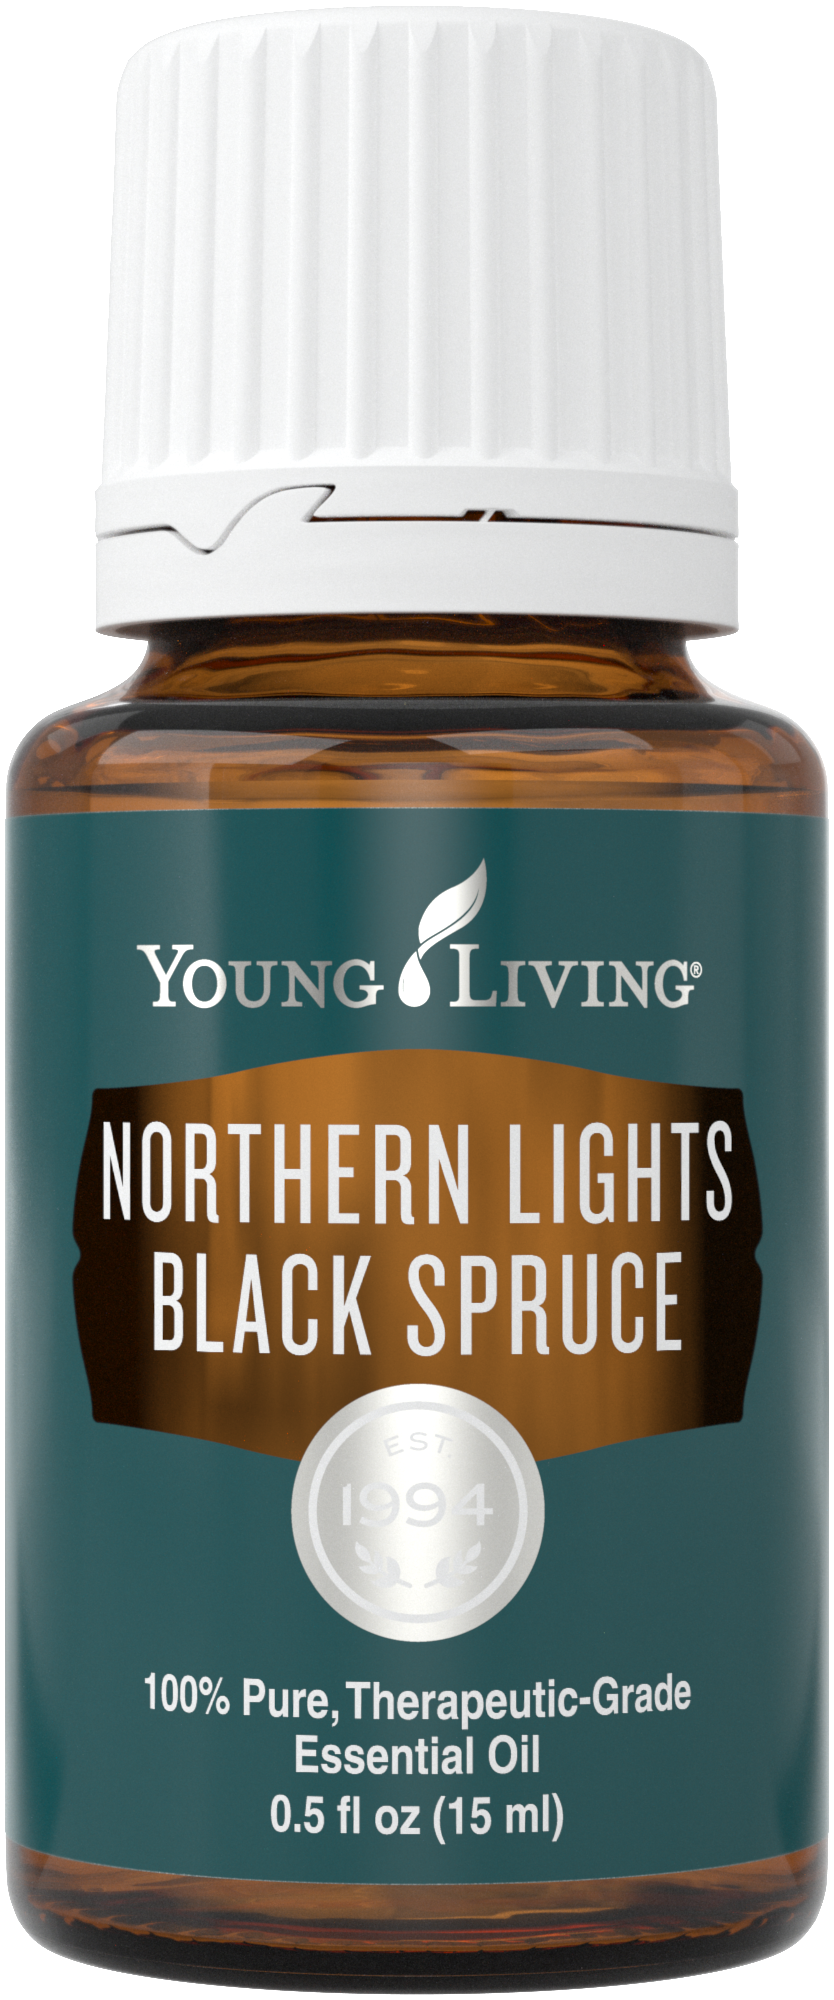 Northern Lights Black Spruce 15ml Silo.png